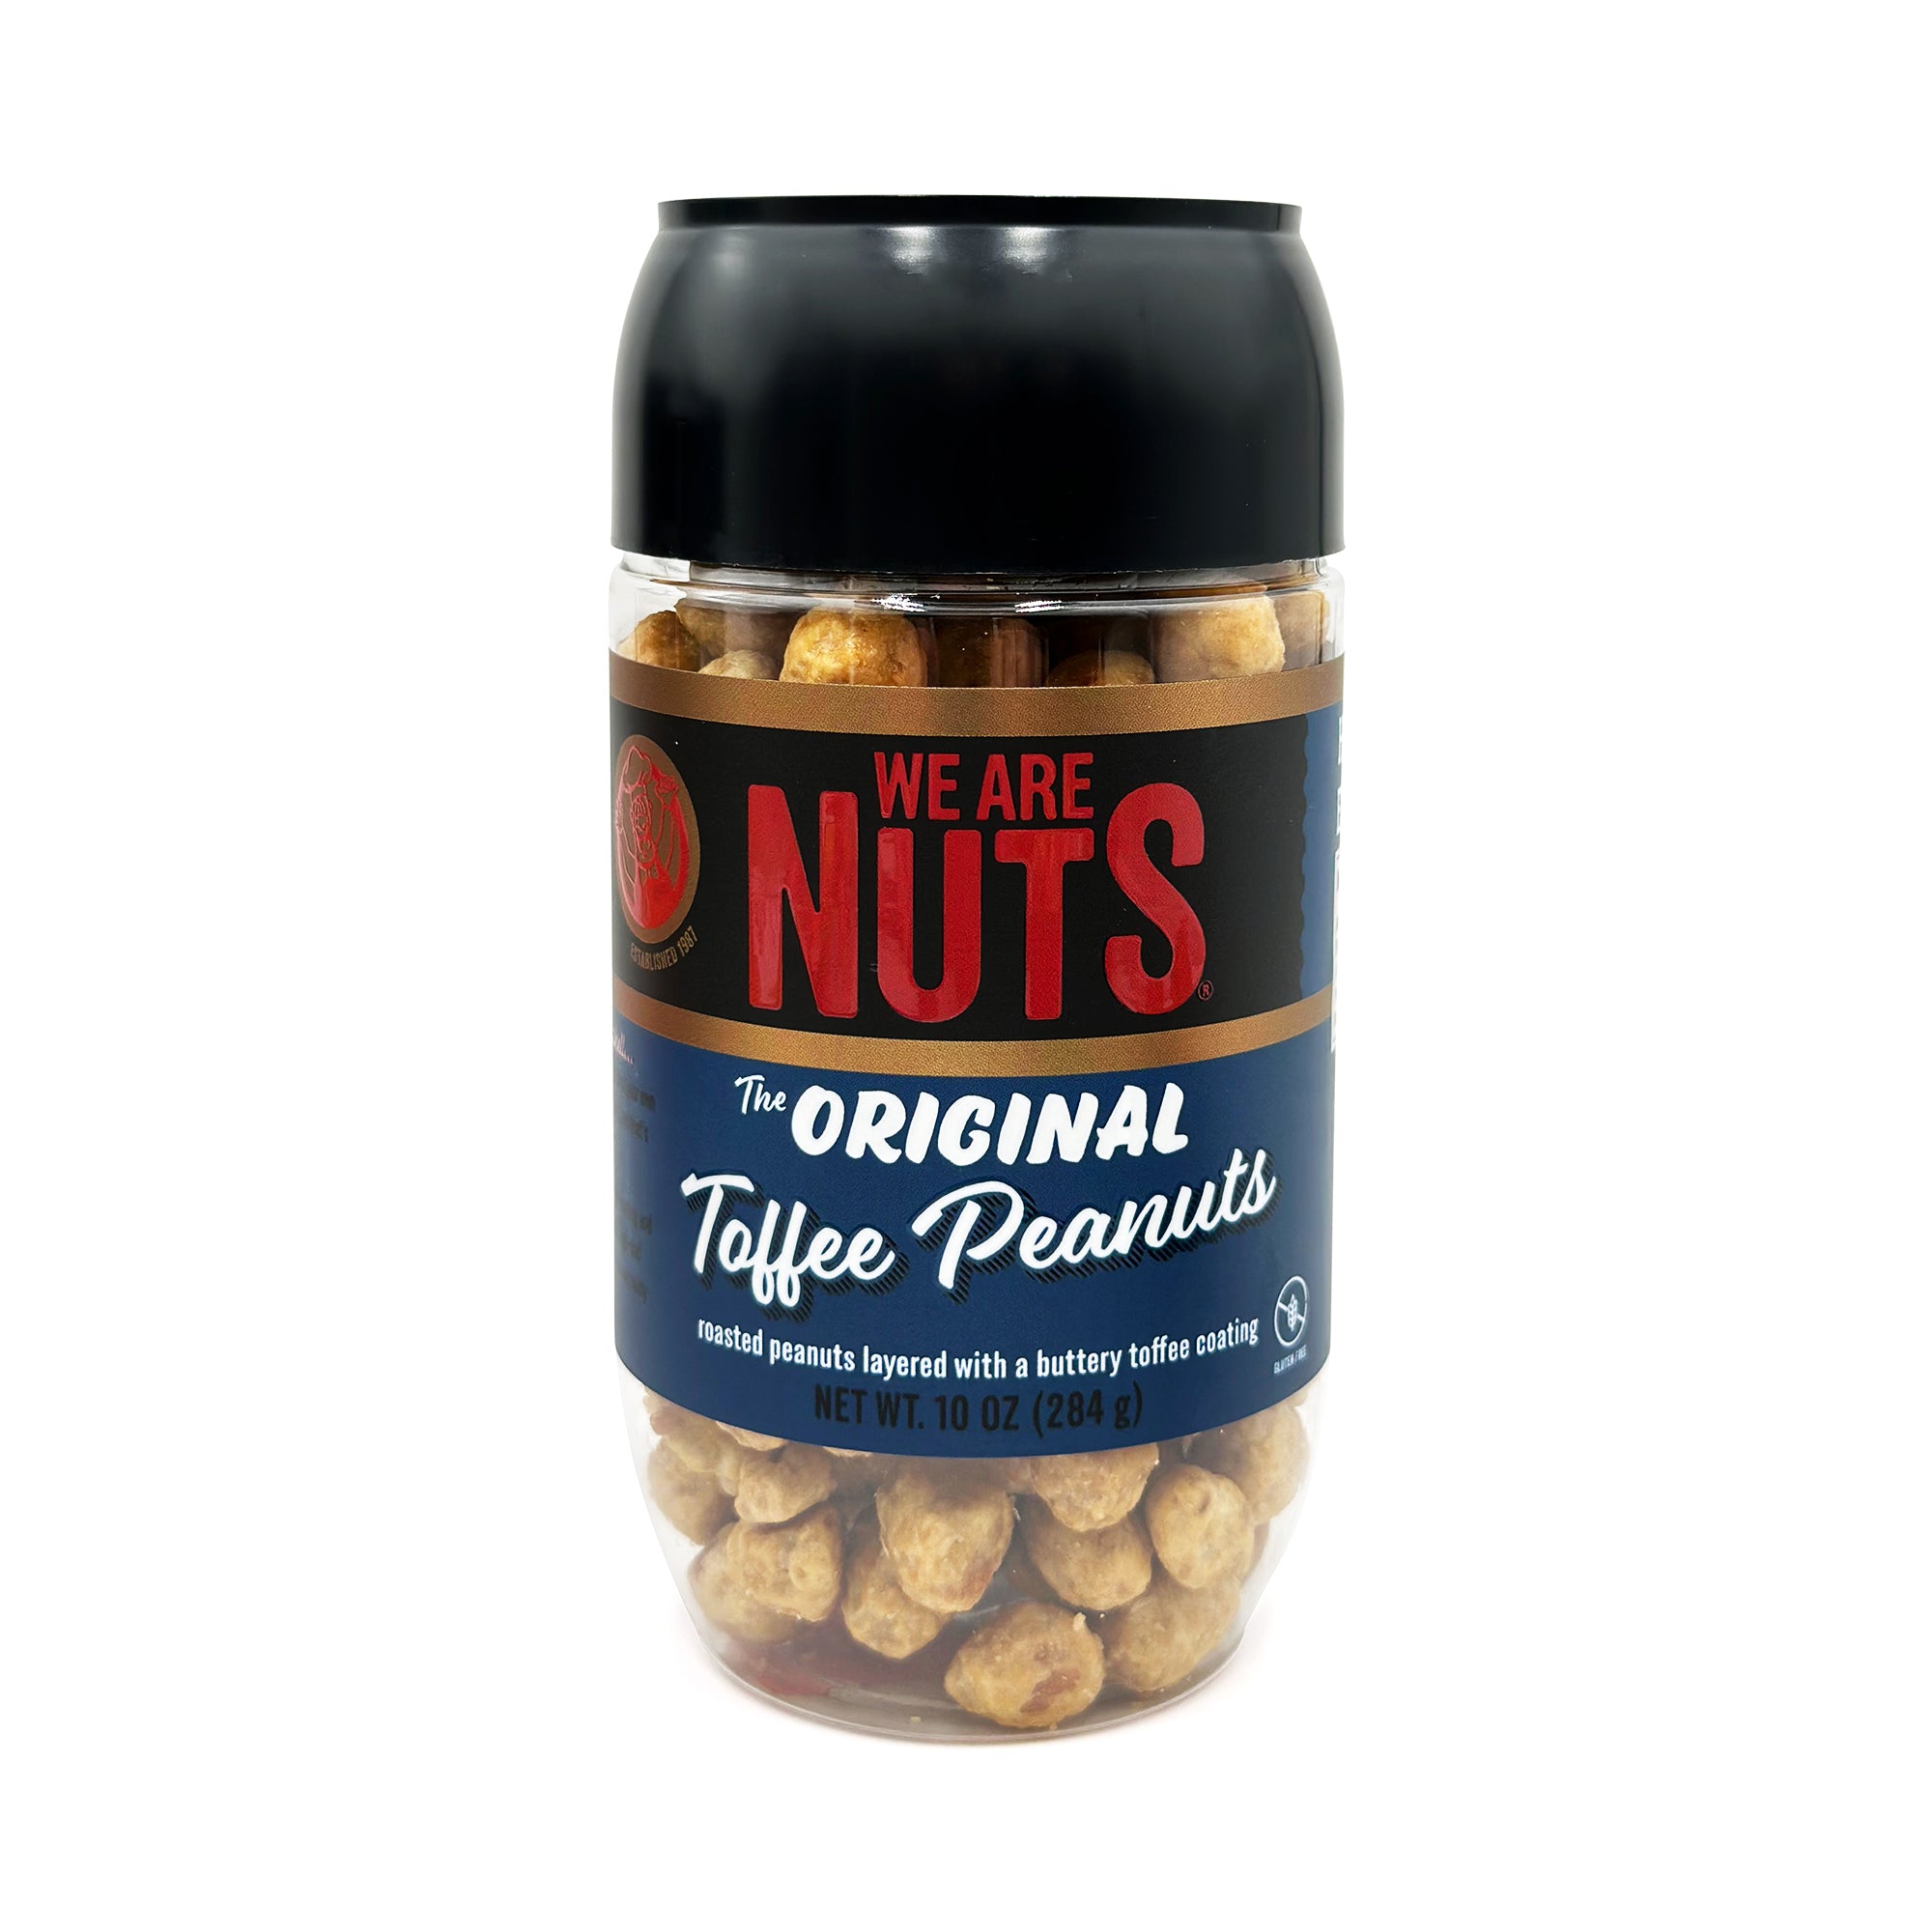 The Original Toffee Peanuts